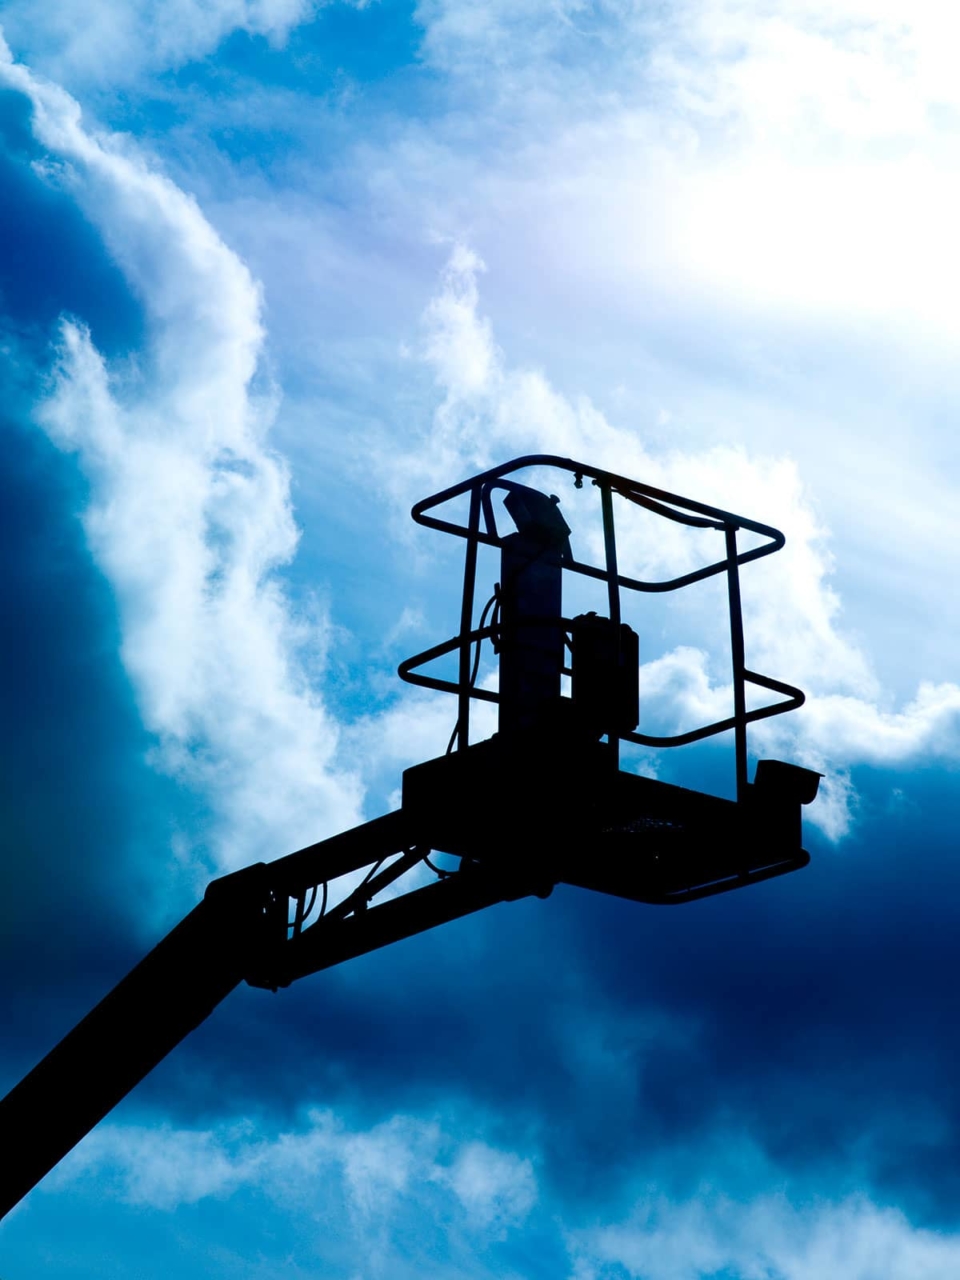 Silhouette of an aerial work platform